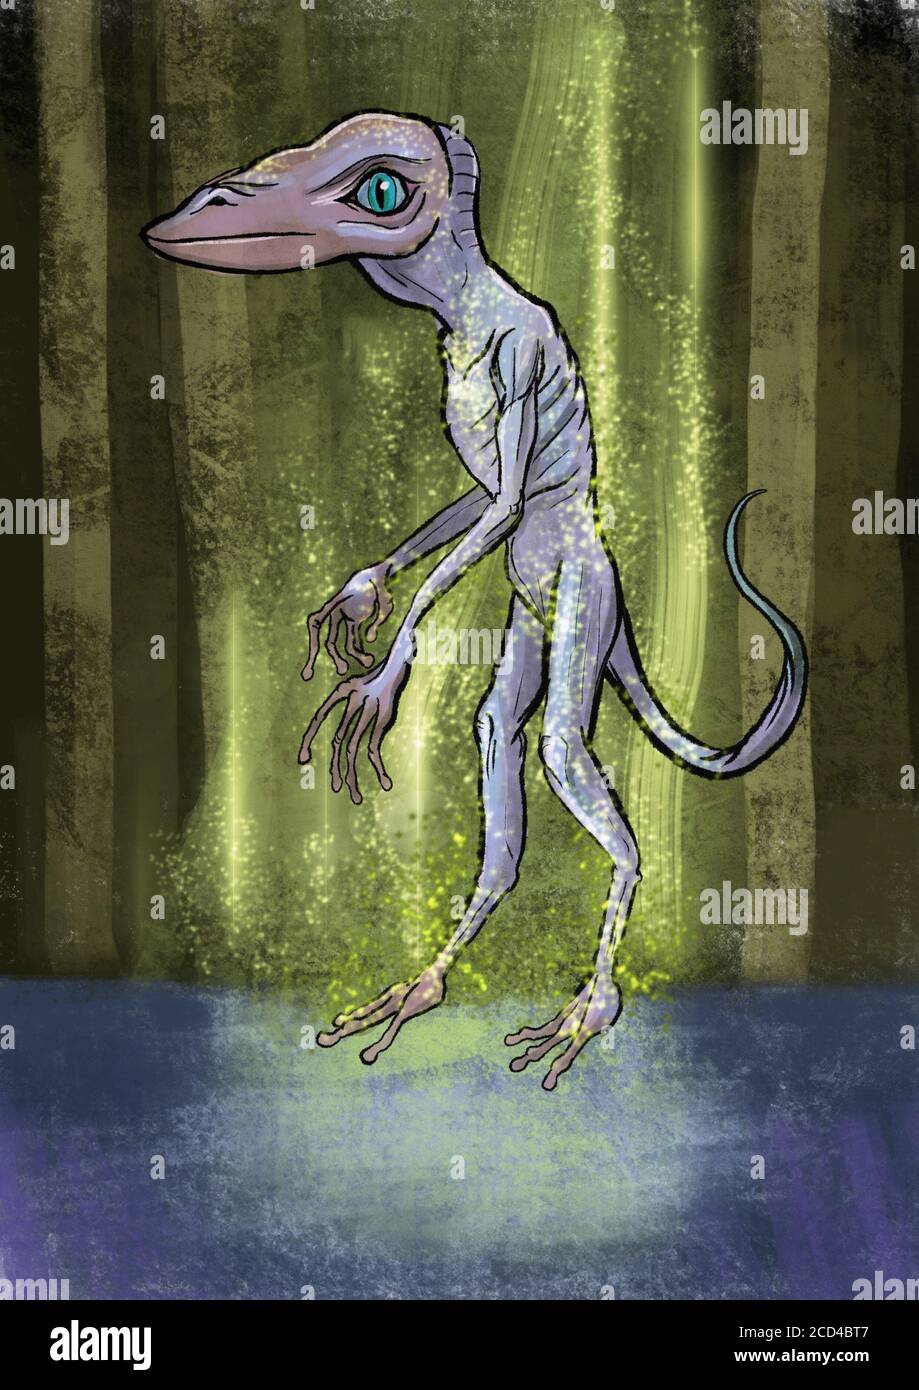 Illustration of a reptilian alien Stock Photo